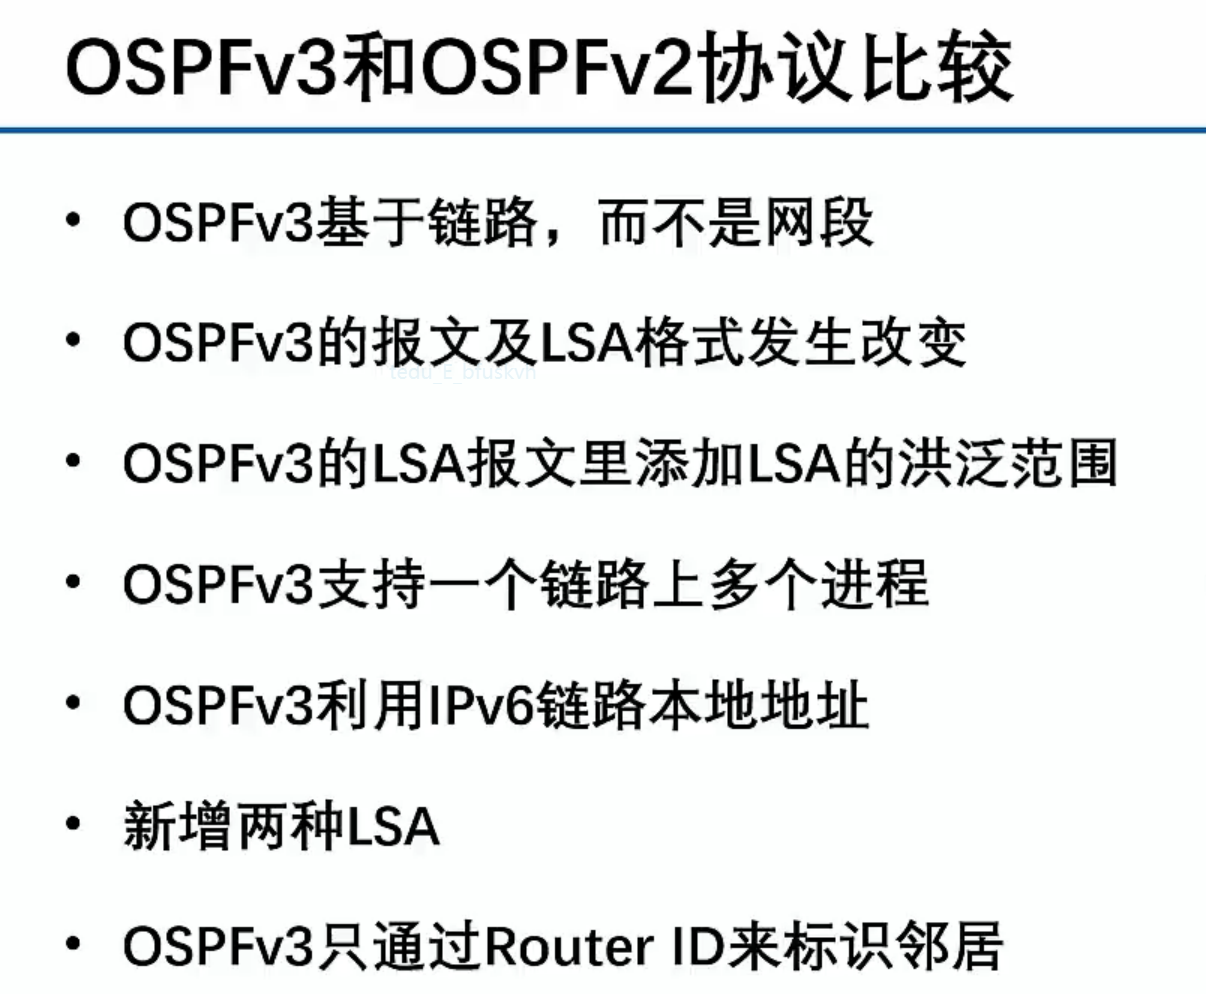 ospfv3 配置命令